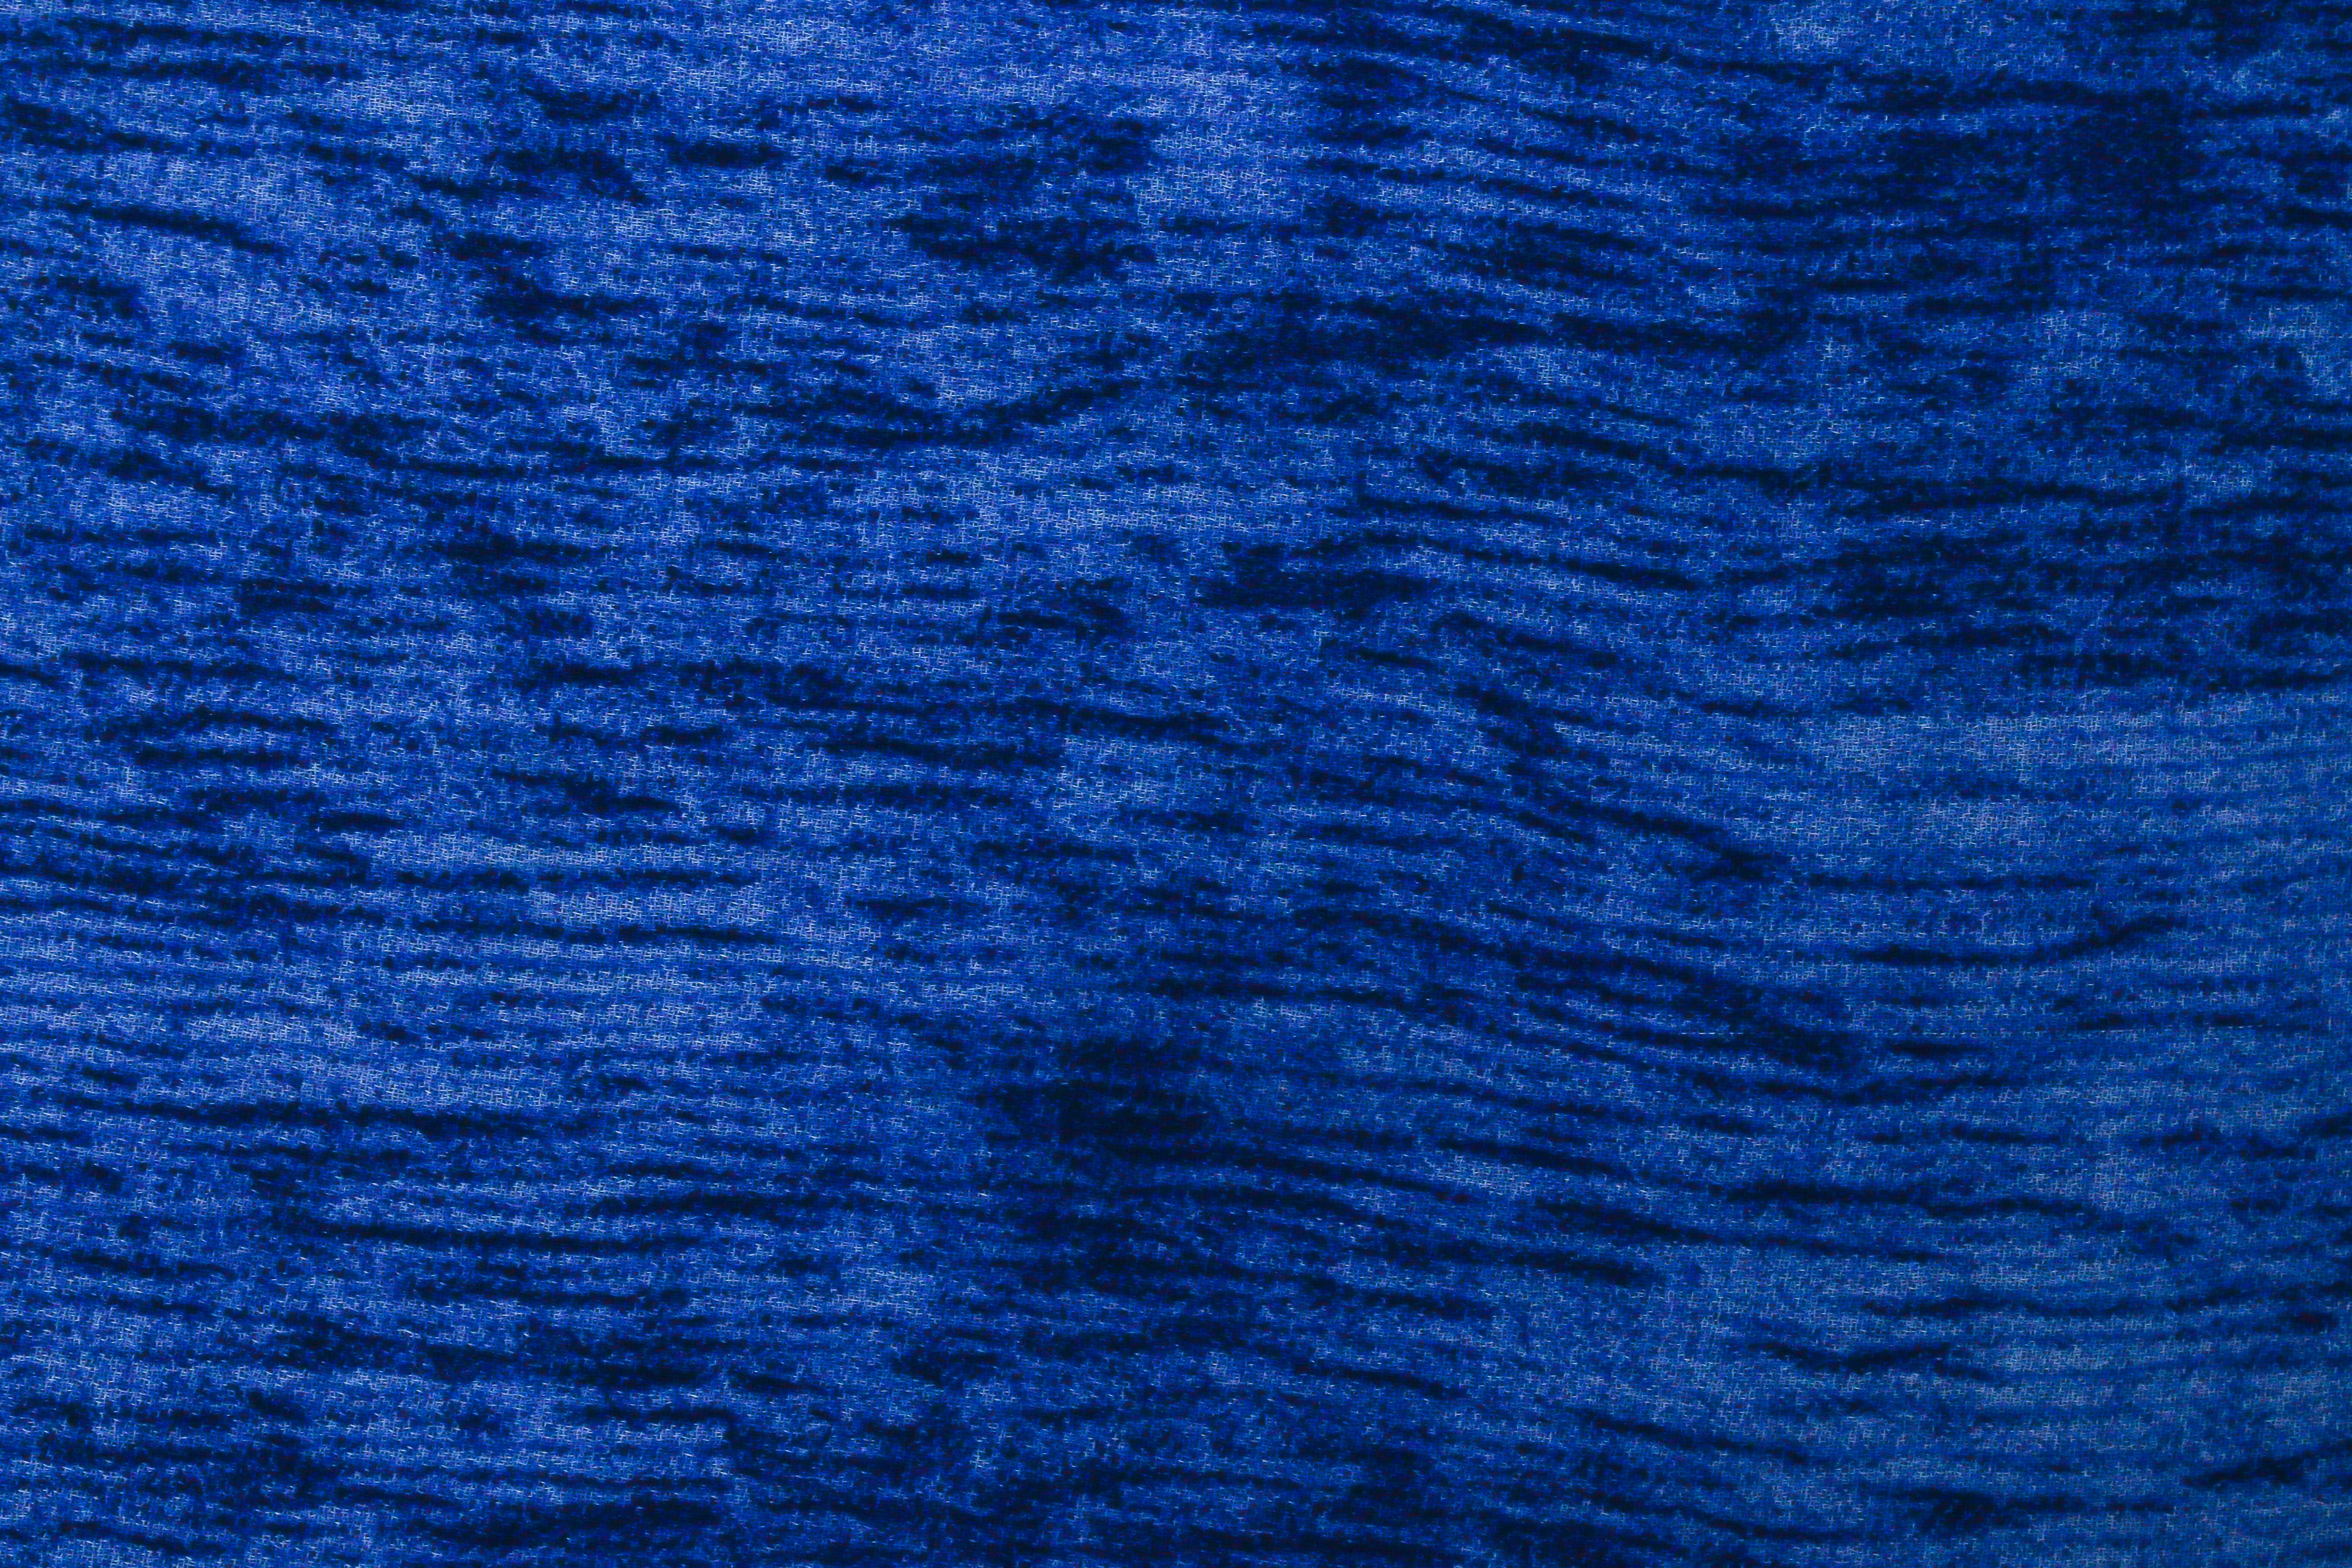 textures, blue, texture, surface, cloth